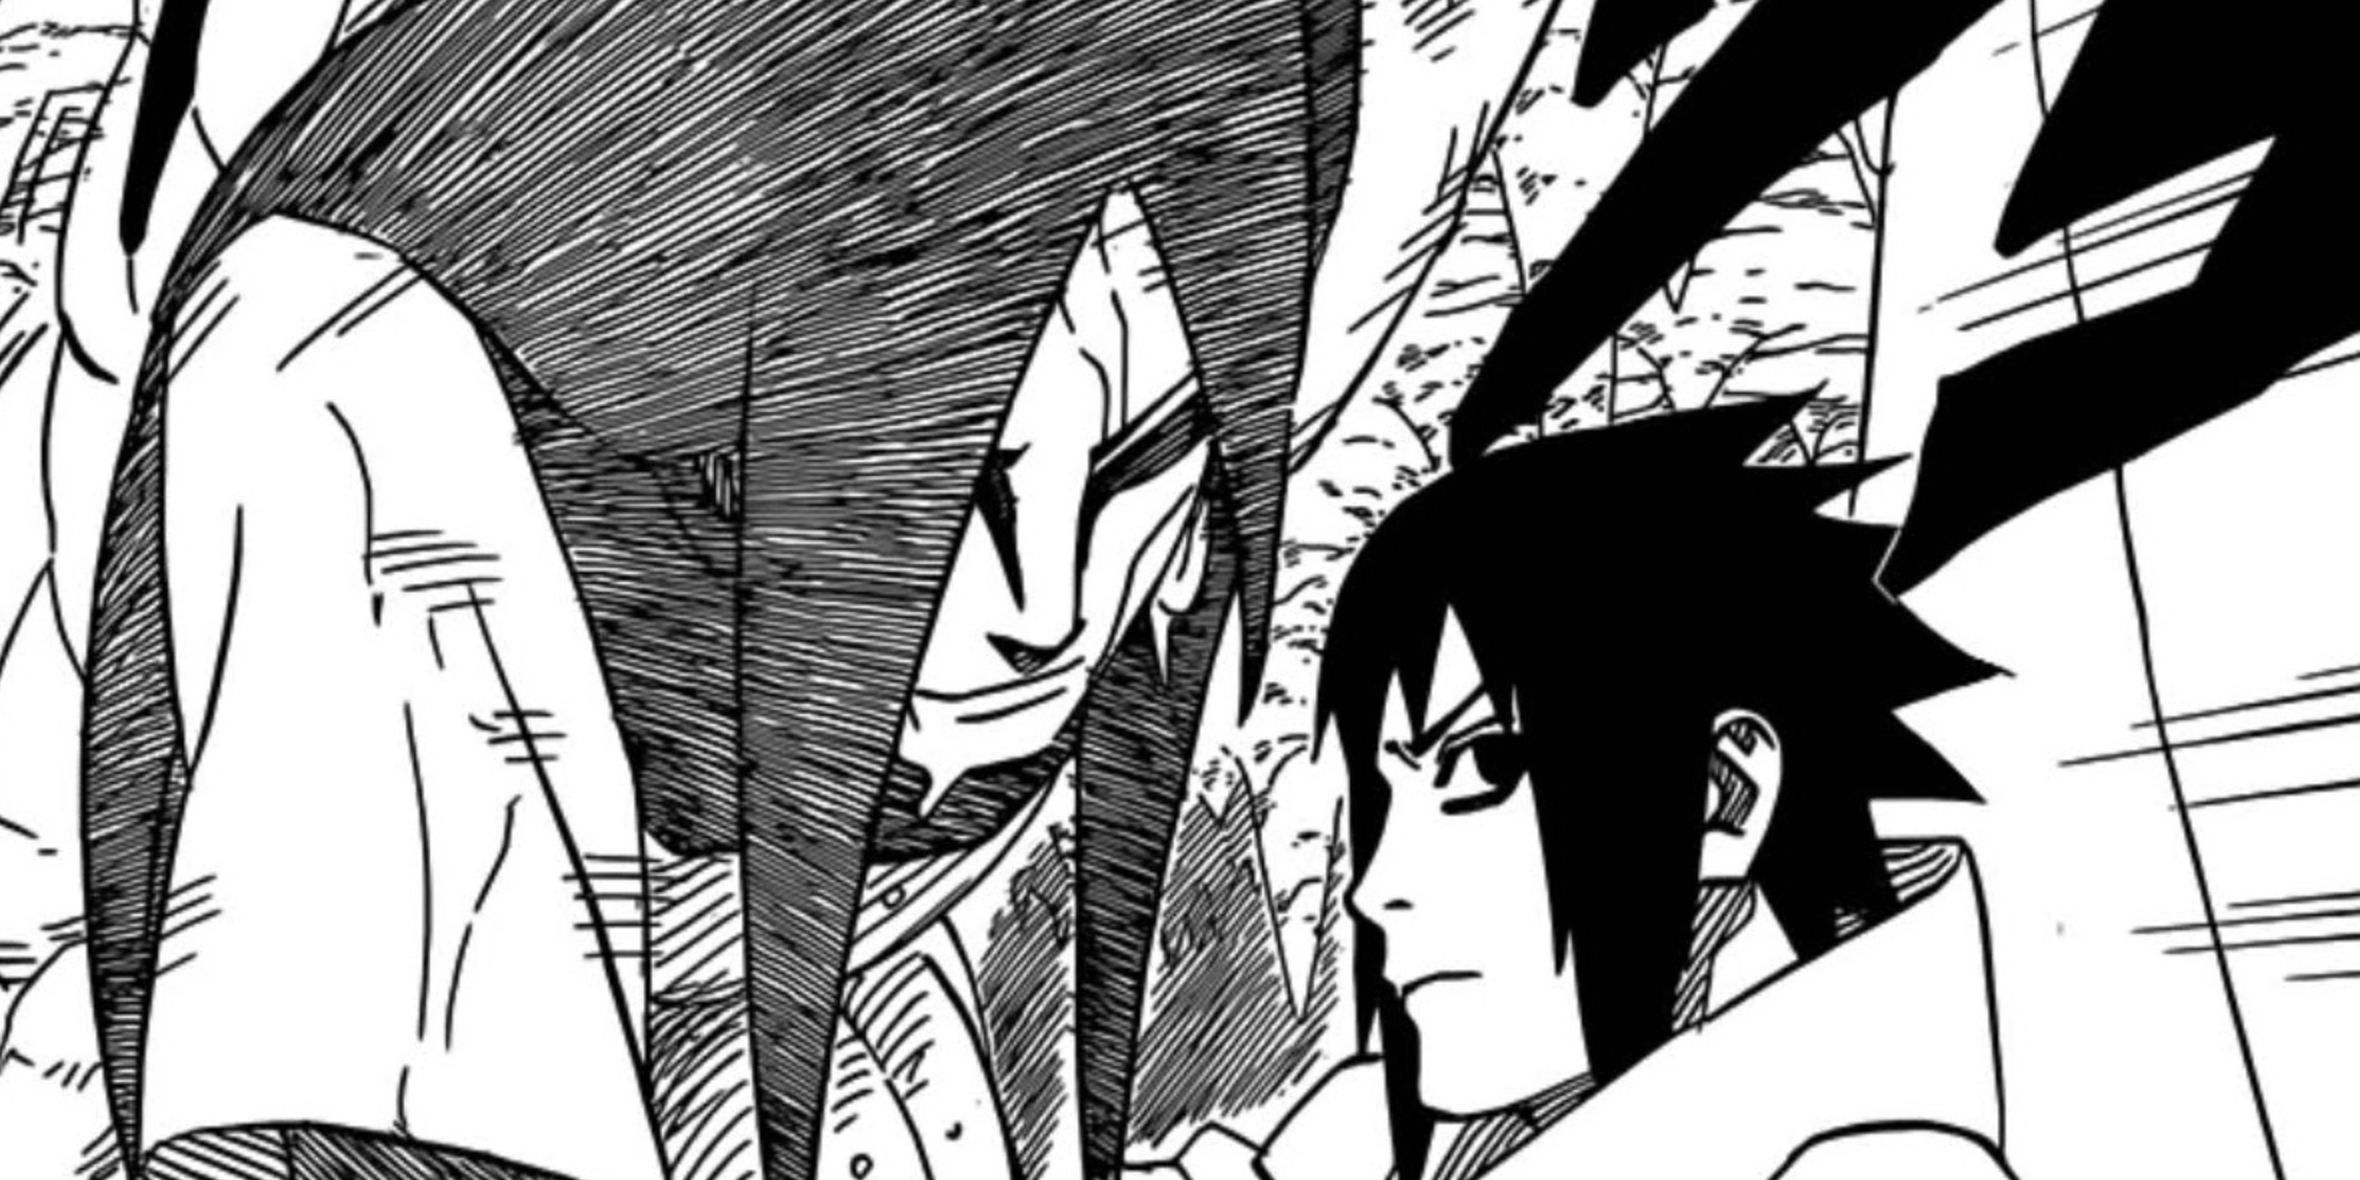 Orochimaru hovers over Sasuke in the Naruto manga